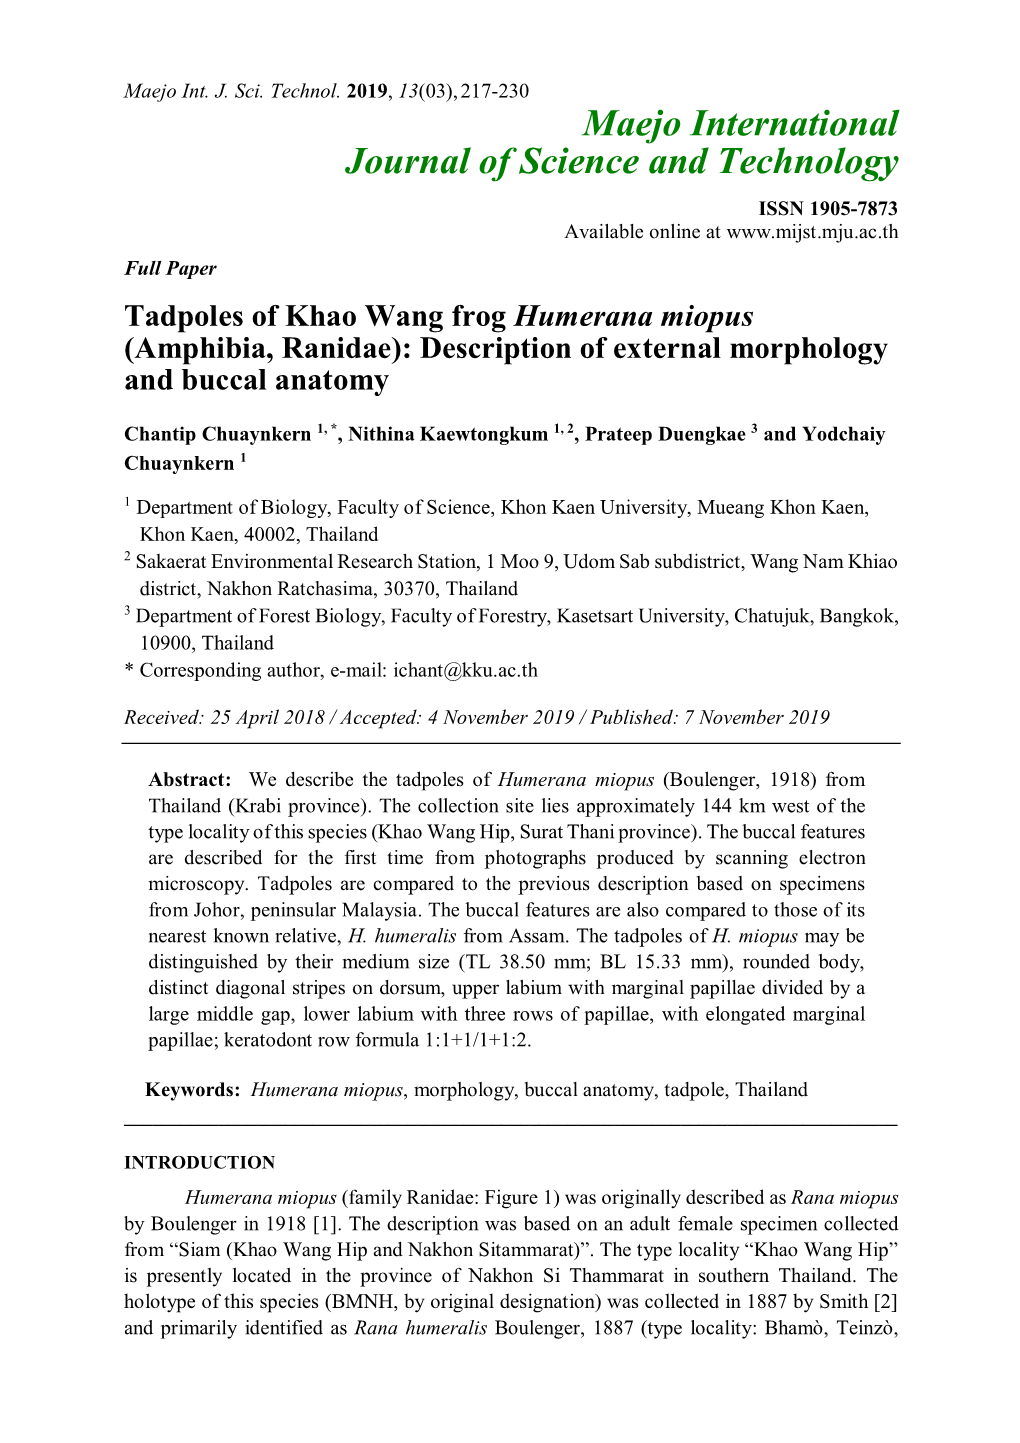 Tadpoles of Khao Wang Frog Humerana Miopus (Amphibia, Ranidae): Description of External Morphology and Buccal Anatomy